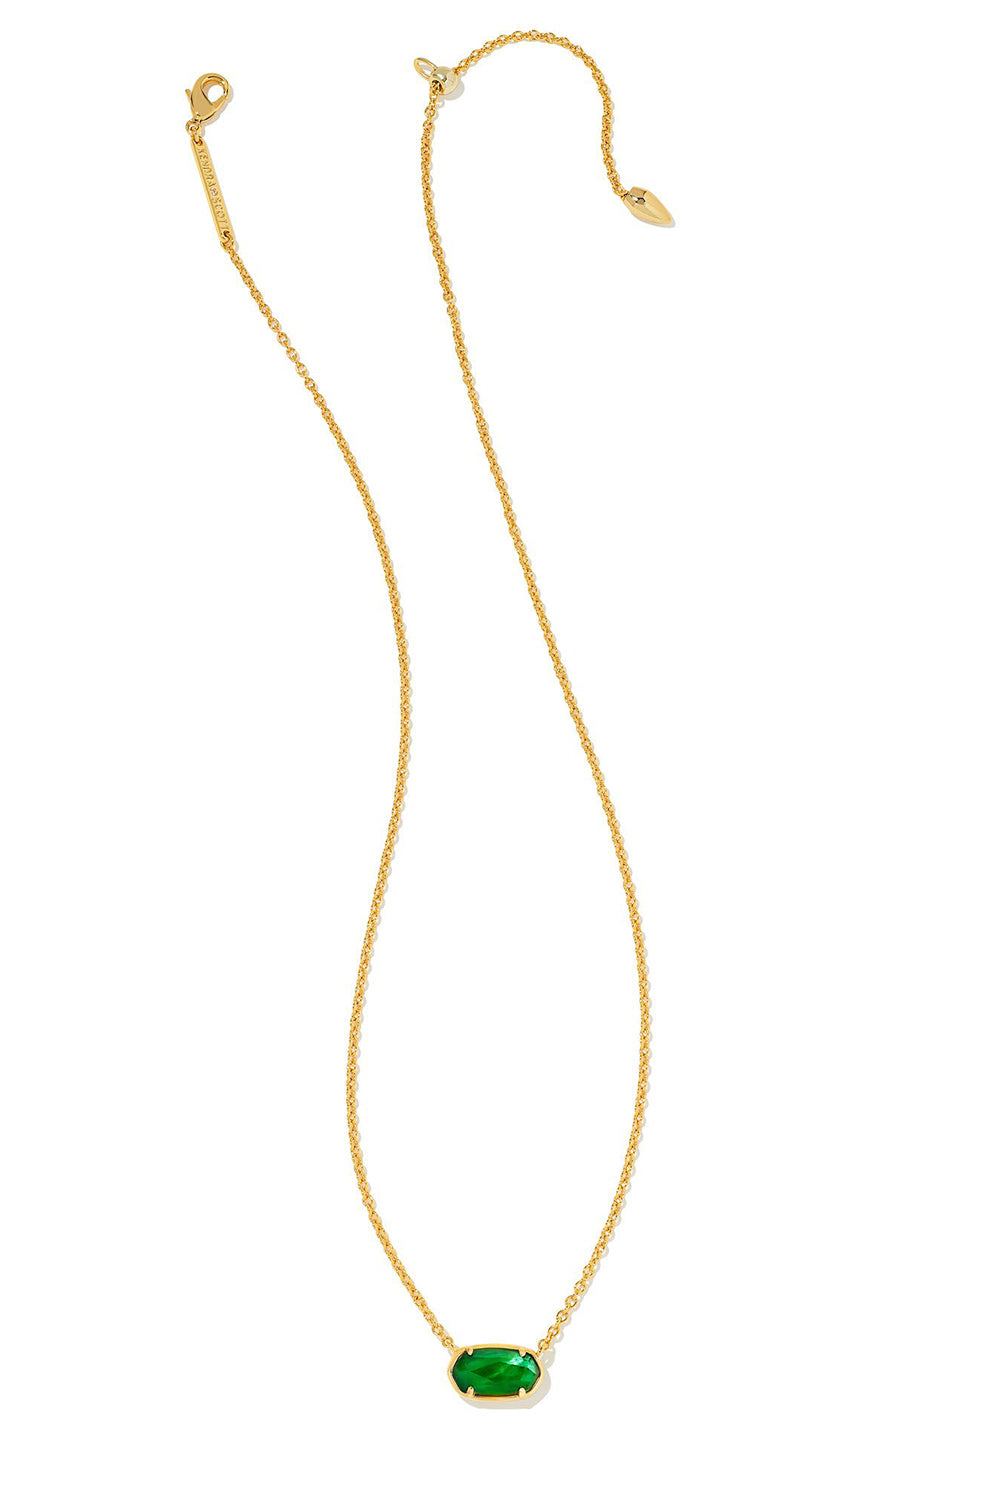 Kendra Scott Grayson Gold Emerald Illusion Necklace | Kiefer Jewelers |  Lutz, FL